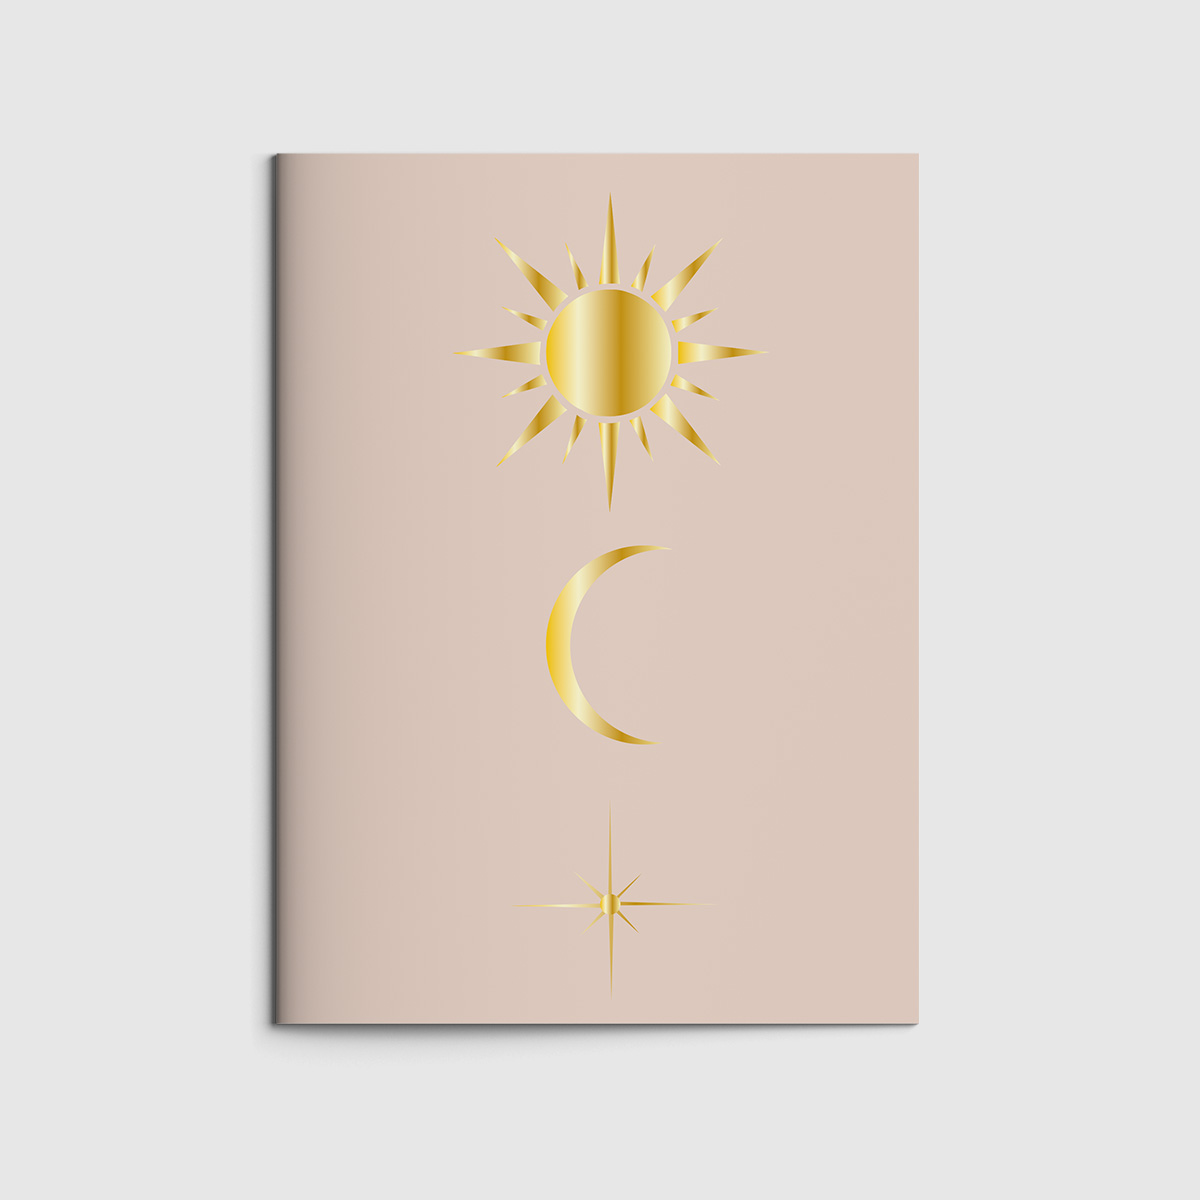 Booklet A6 - Toni Starck - Sun moon star